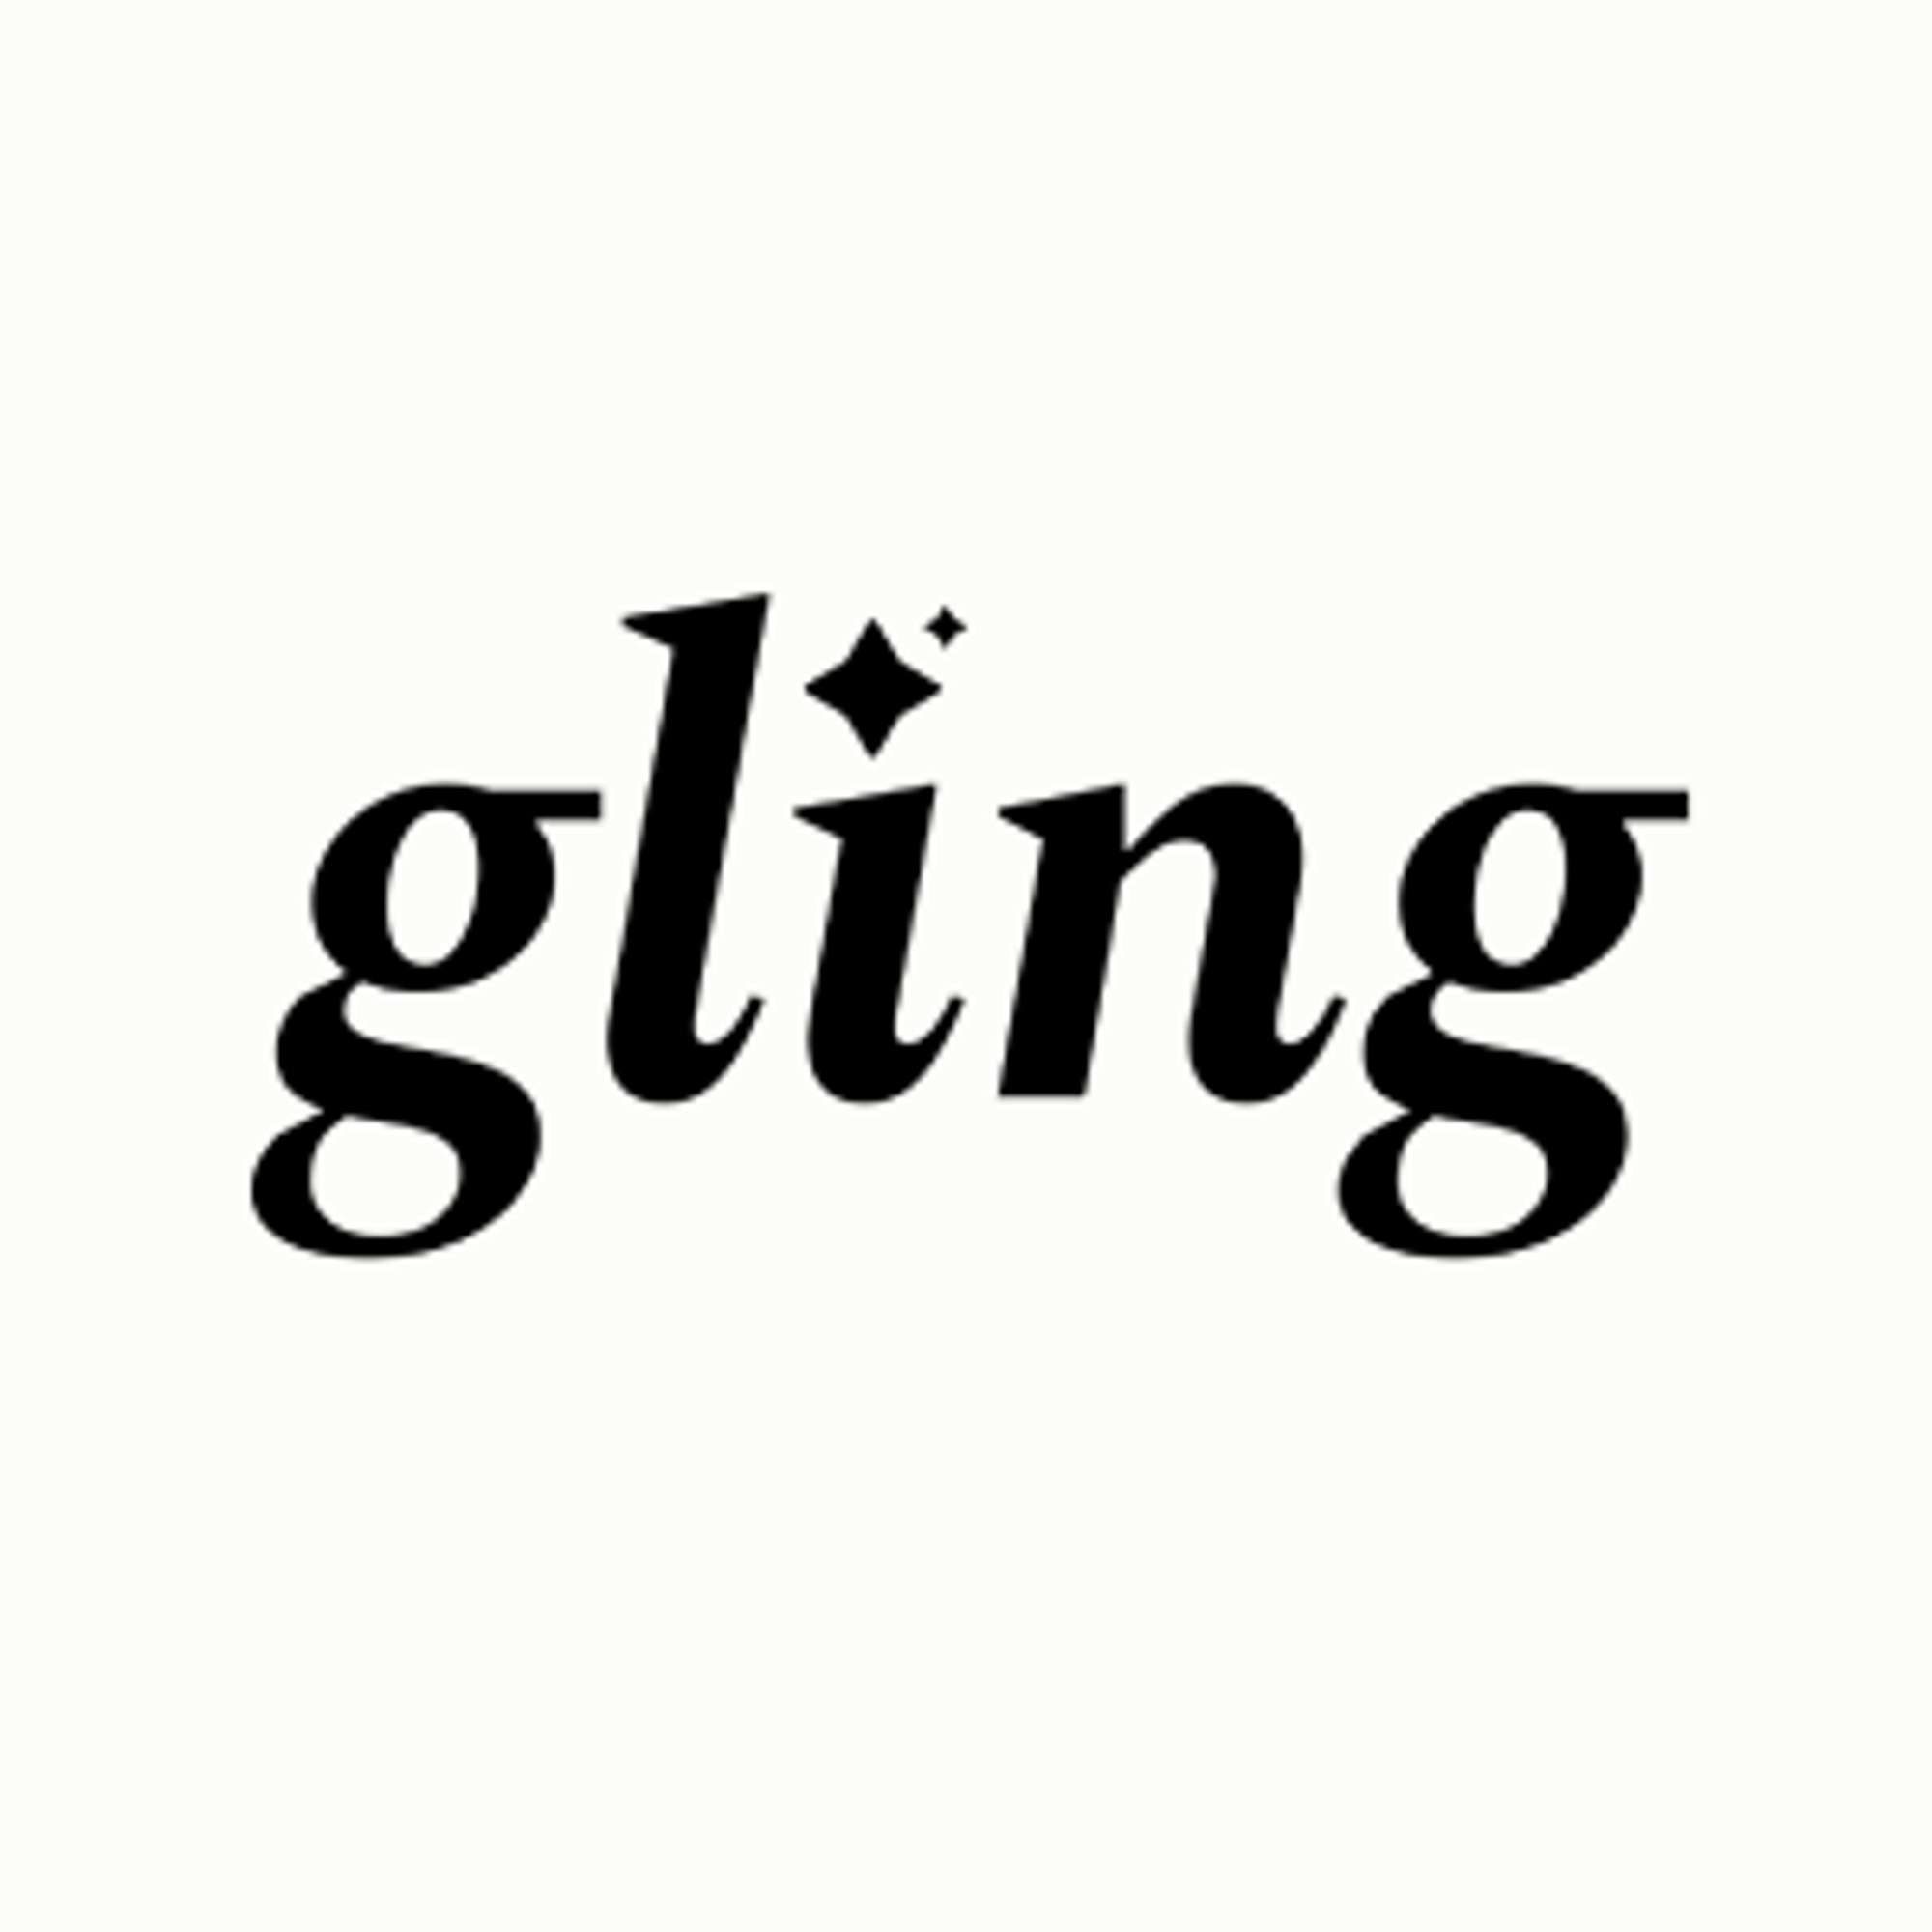 Gling